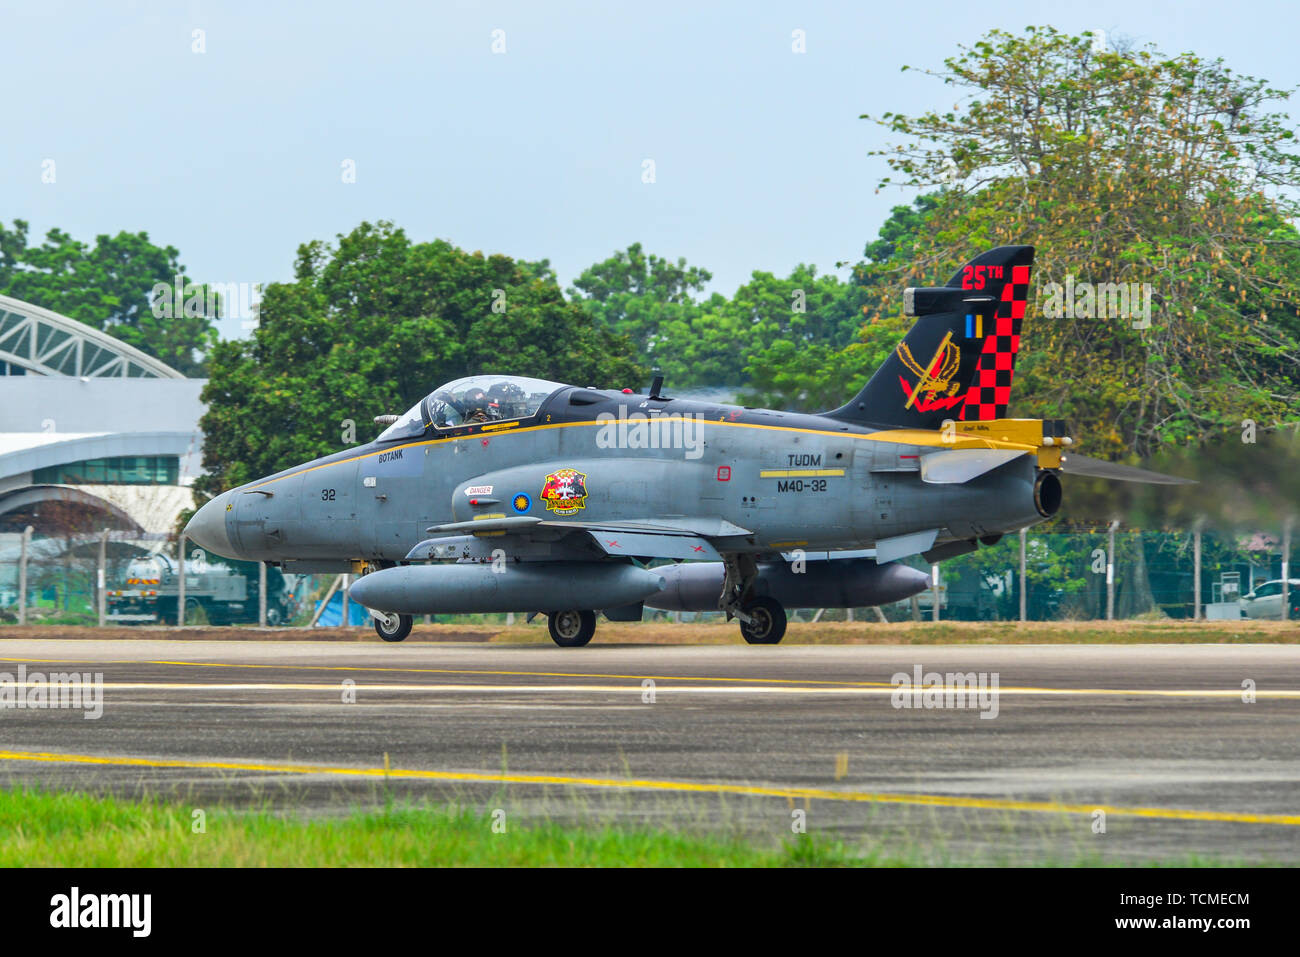 Langkawi, Malaysia - Mar 31, 2019. British Aerospace Hawk 200 of Royal Malaysian Air Force (TUDM M40-32) taxiing on runway of Langkawi Airport (LGK). Stock Photo